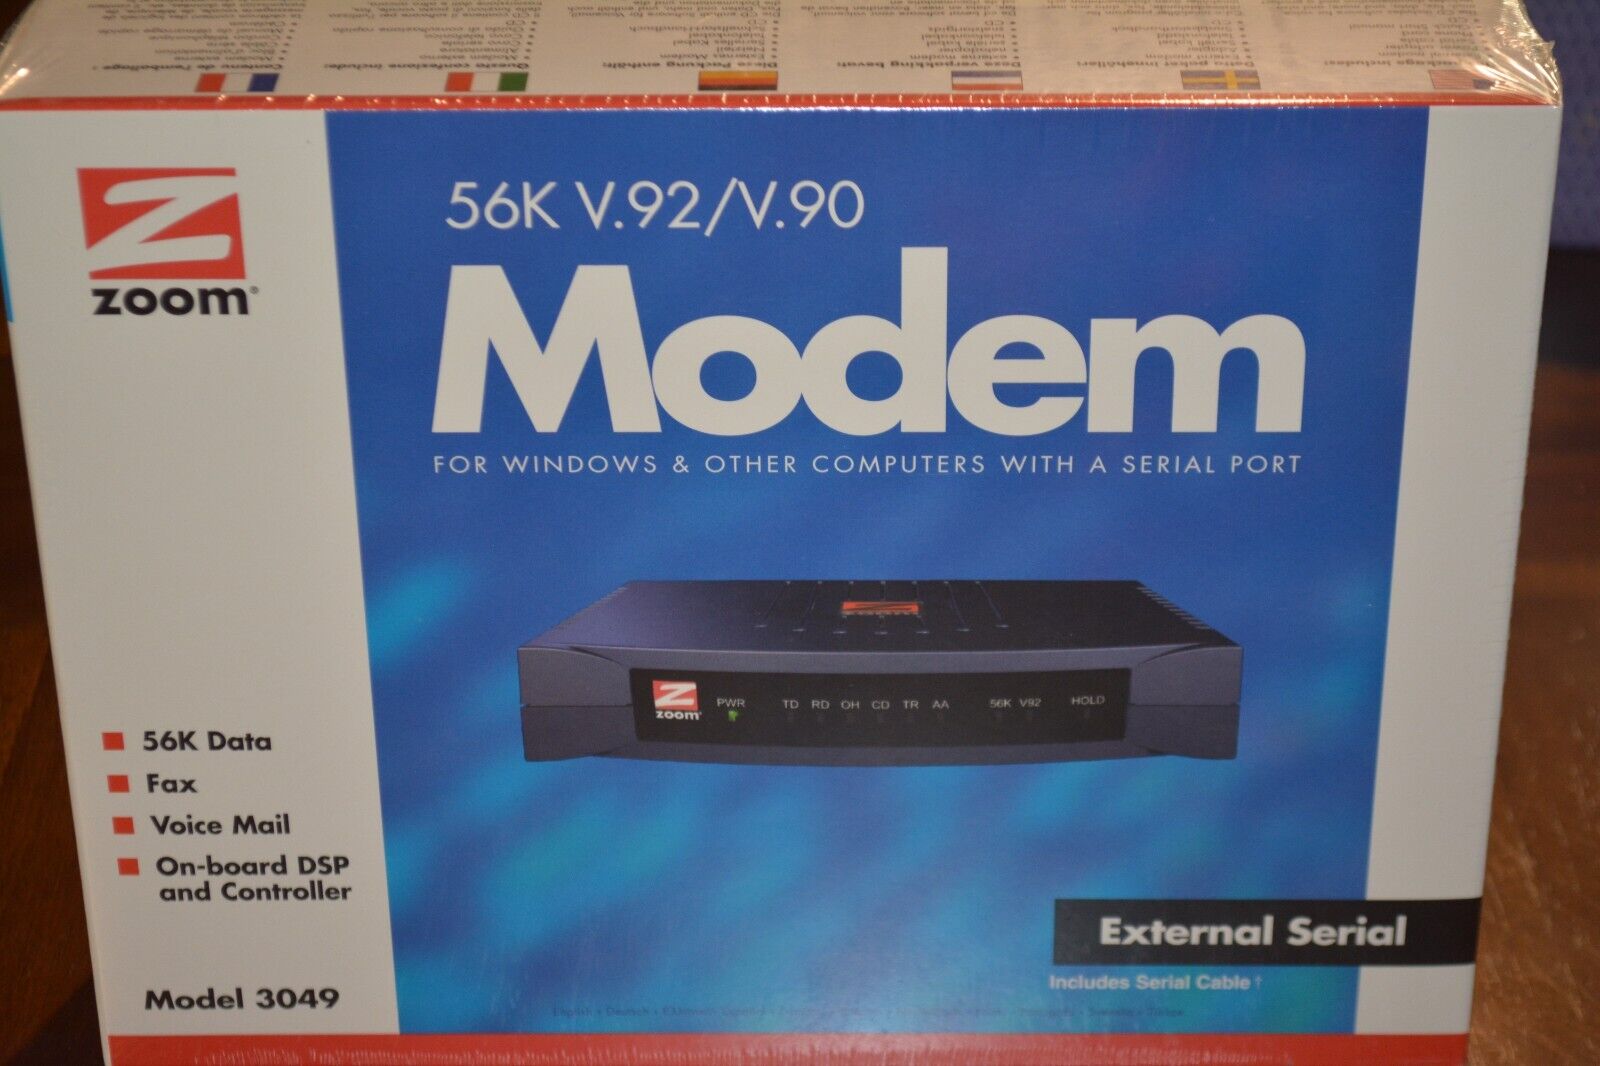 Zoom Model3049 56K V.92/V.90Modem for Windows with Serial Port -- NEW UNIT